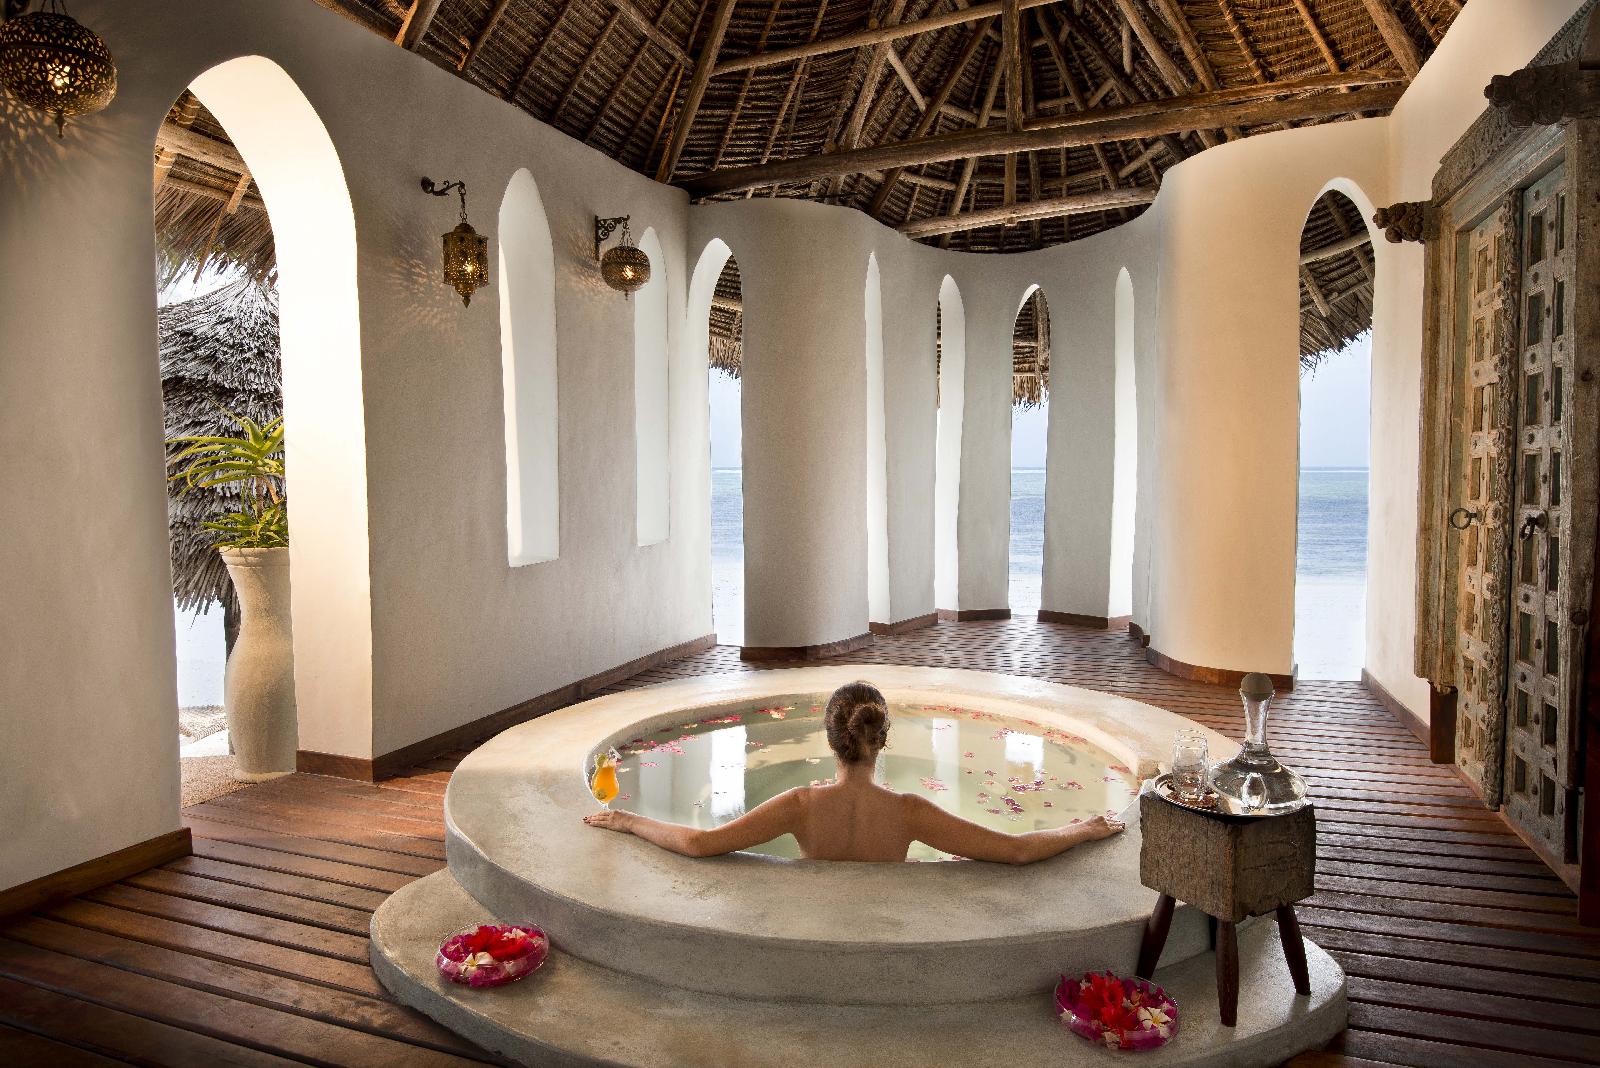 A woman bathing in the spa pool at Xanadu, Zanzibar